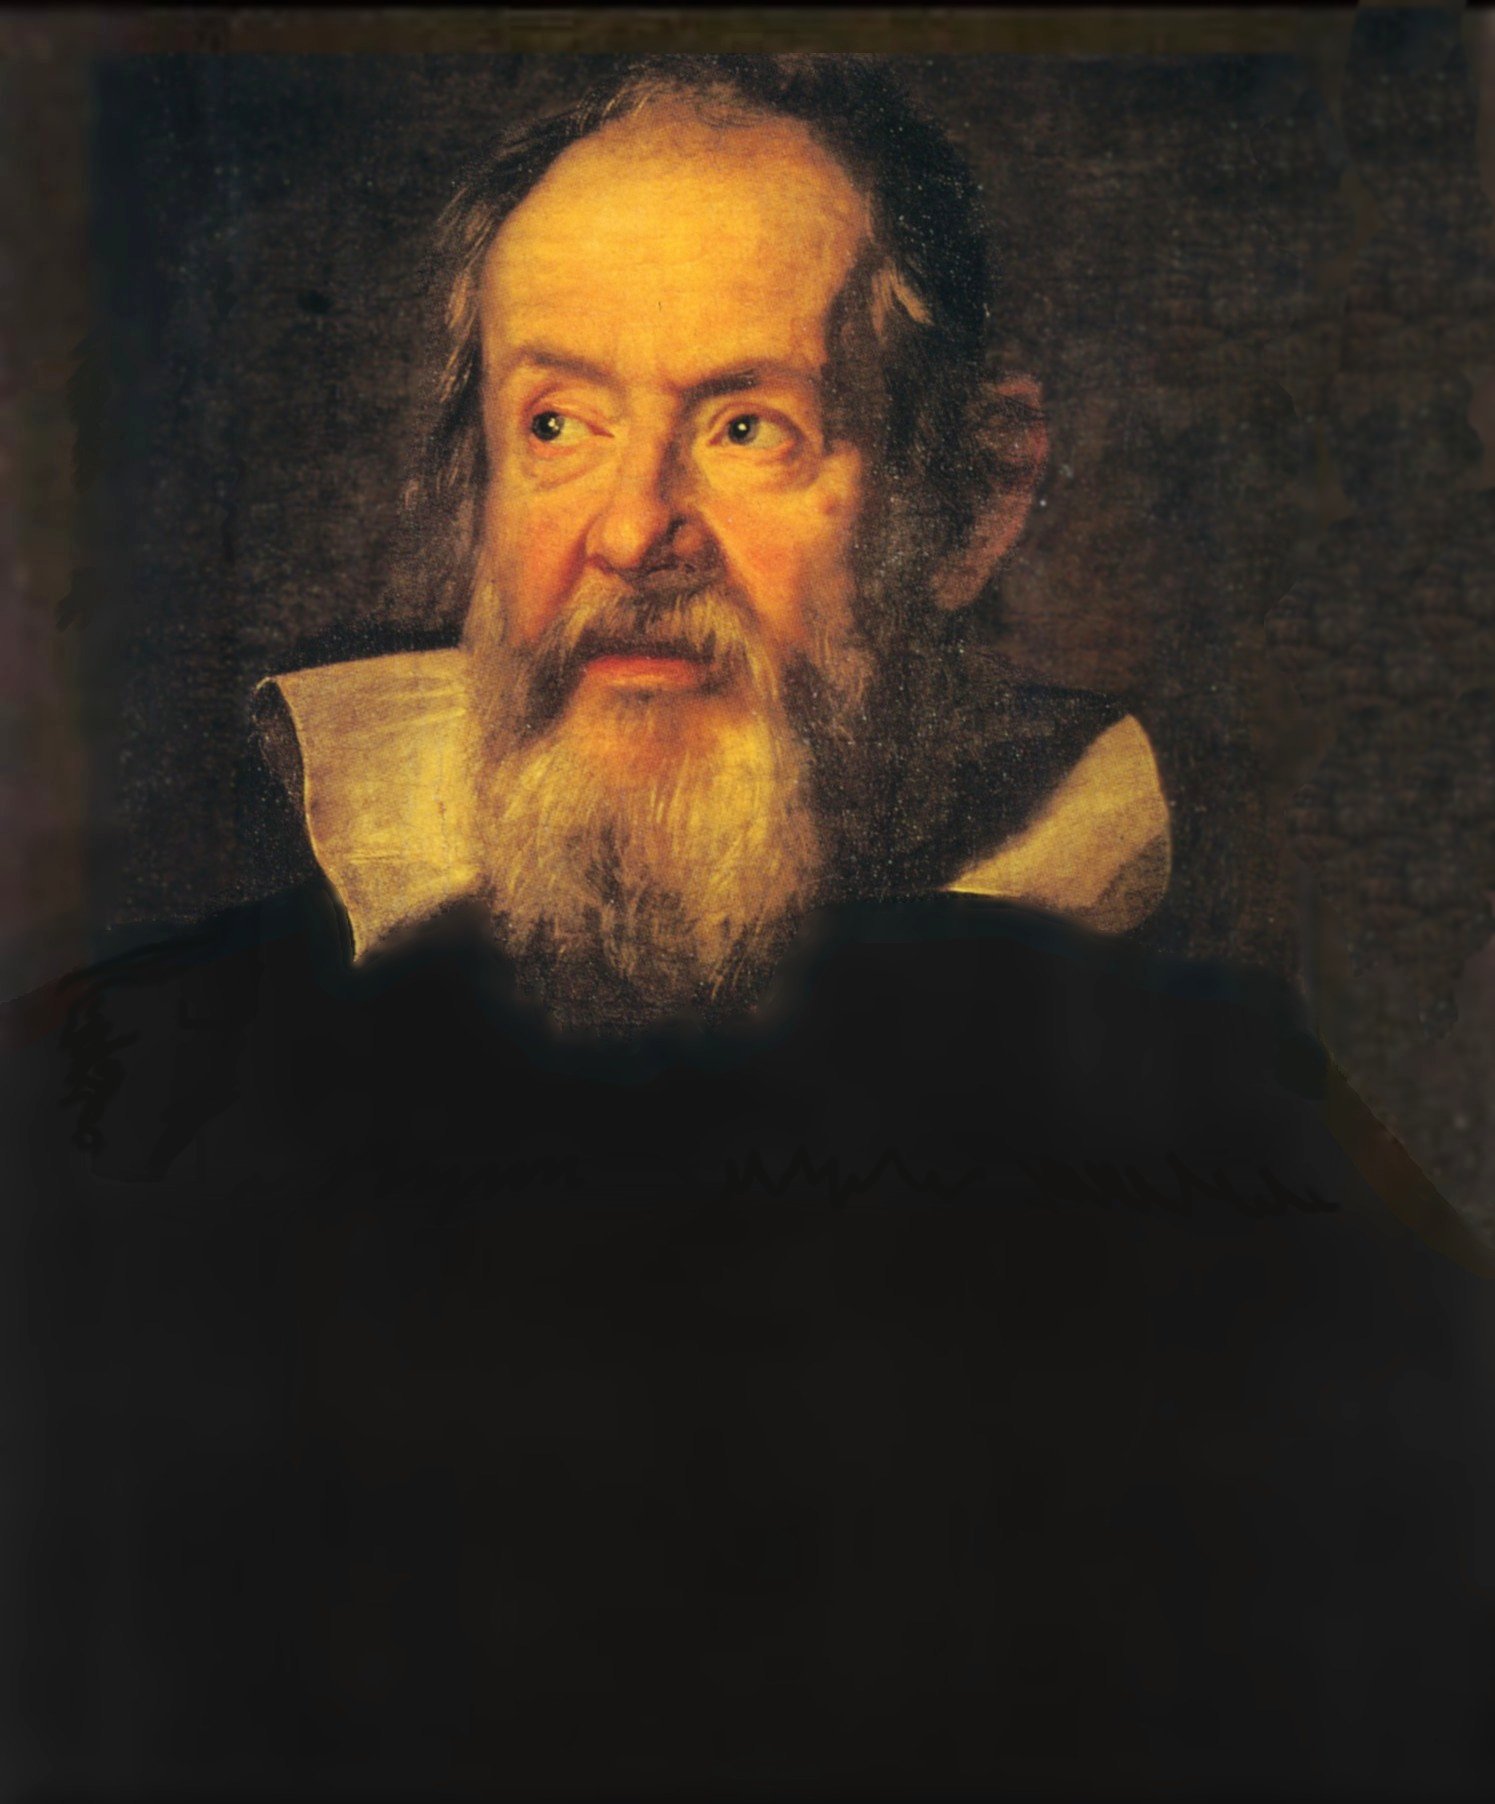 RIP Galileo